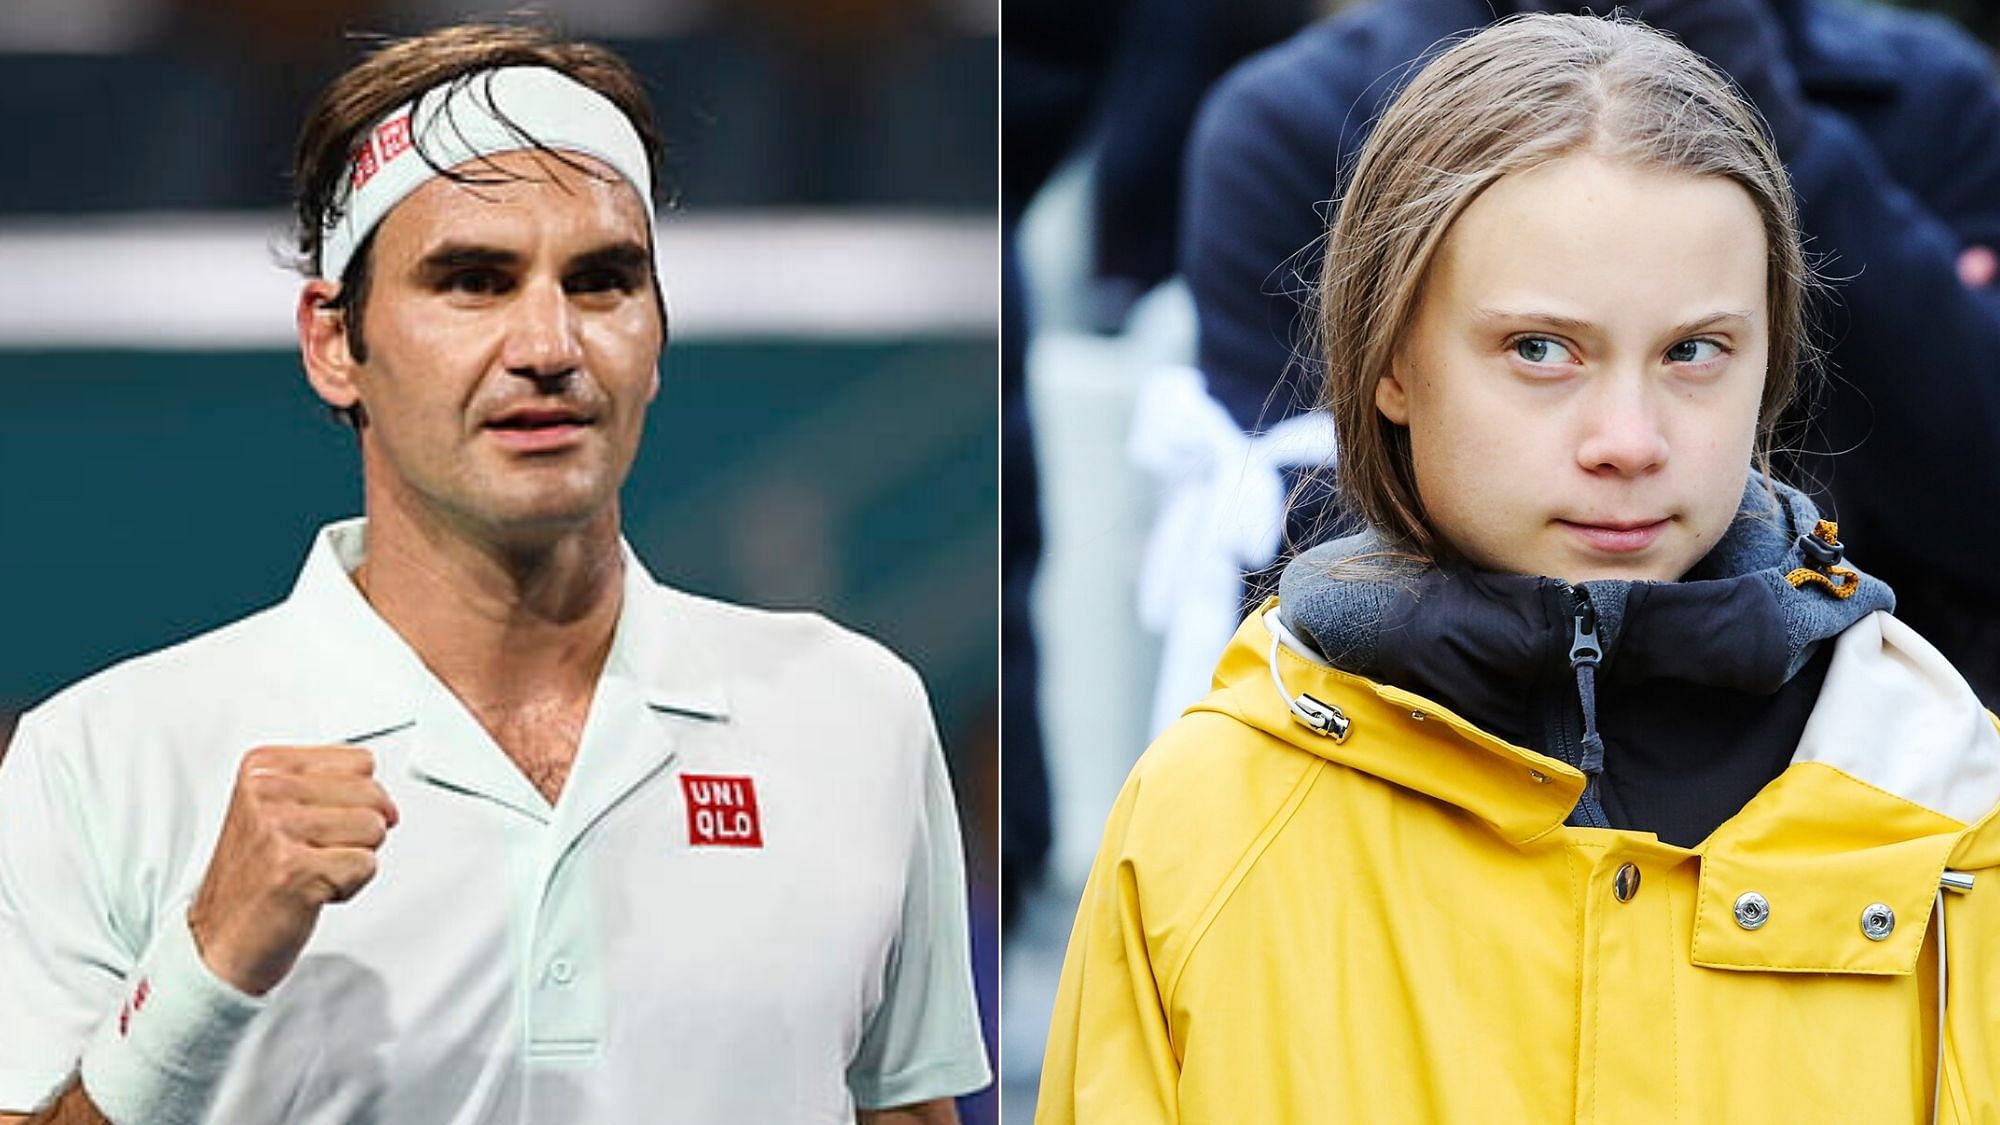 Tennis legend Roger Federer has hit-back at climate activist Greta Thunberg.